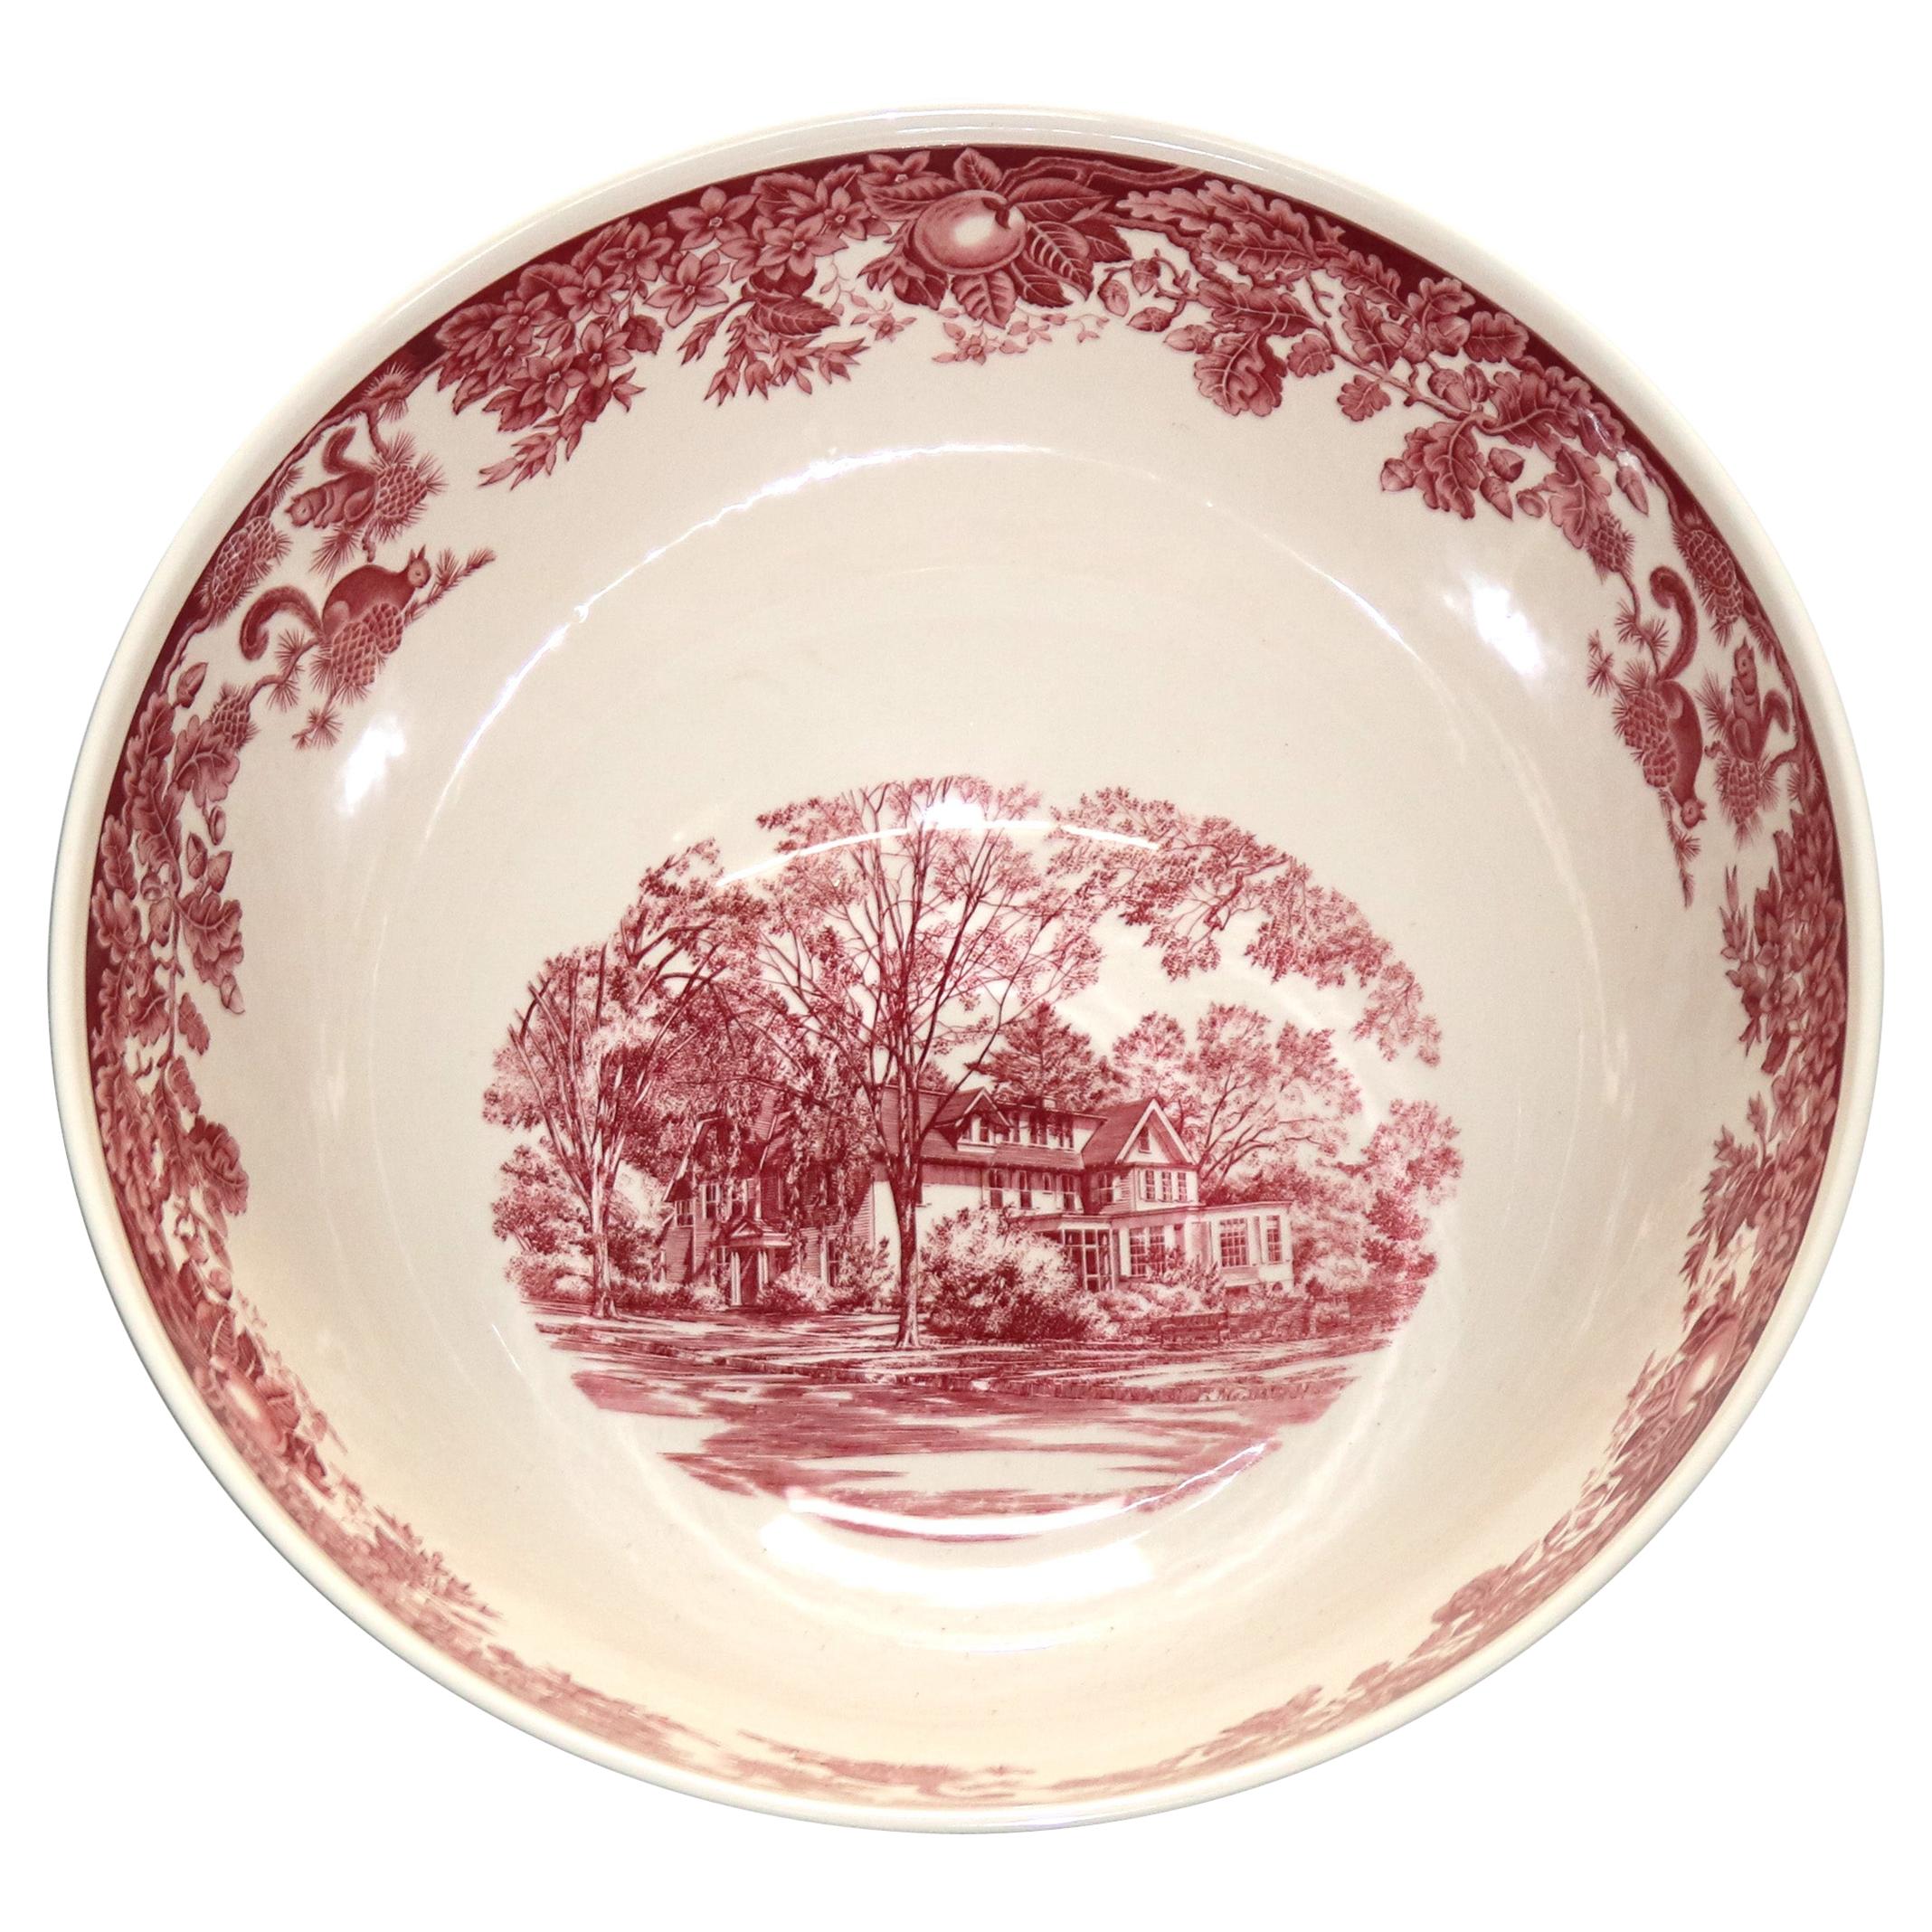 Antique English Wedgwood Scenic Red & White Porcelain Center Bowl, 20thC